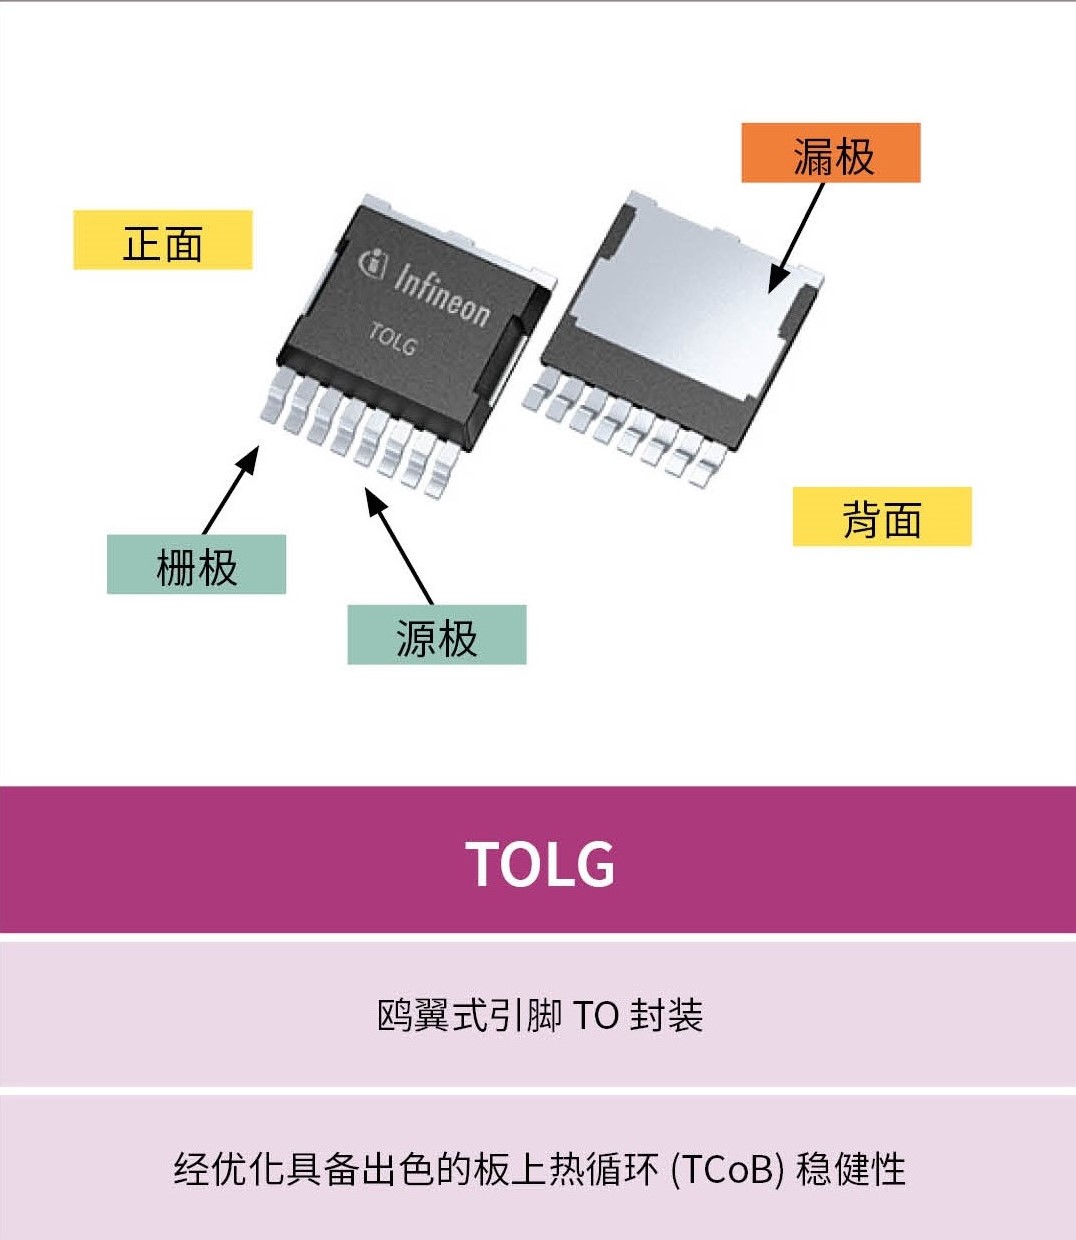 Infineon package TOLG details